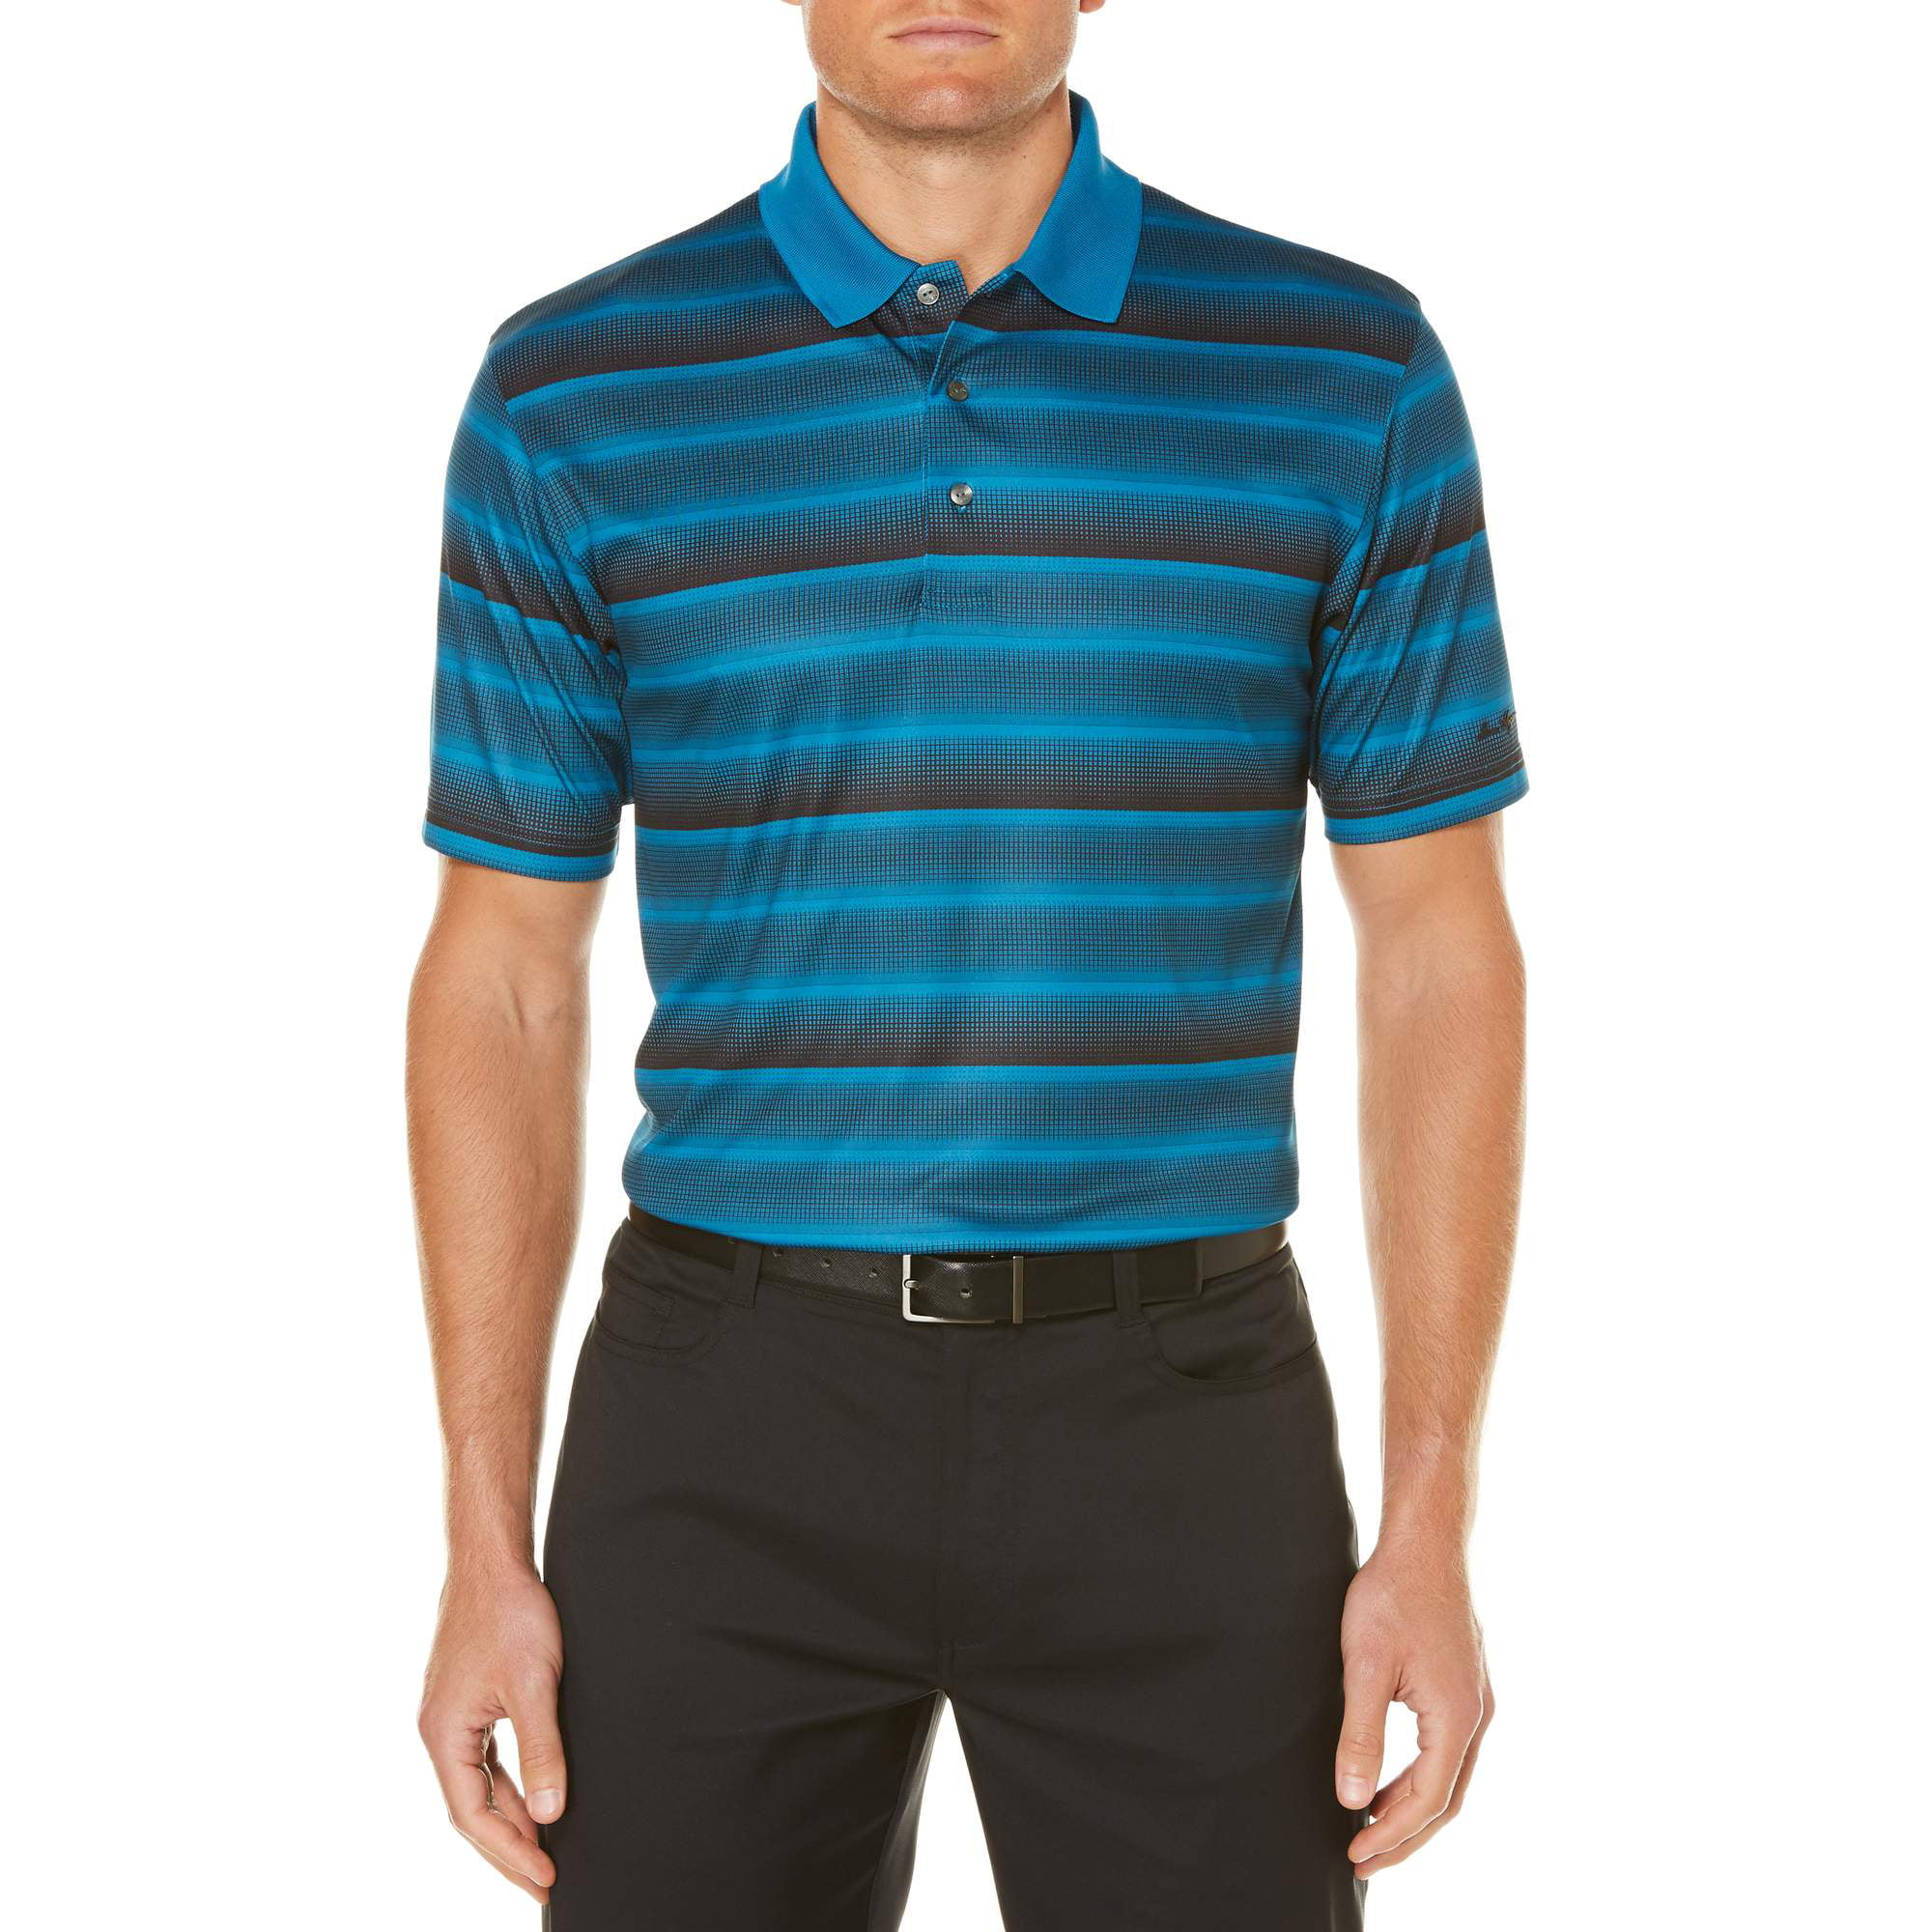 Big Men's Performance Short Sleeve Stripe Golf Polo Shirt - Walmart.com